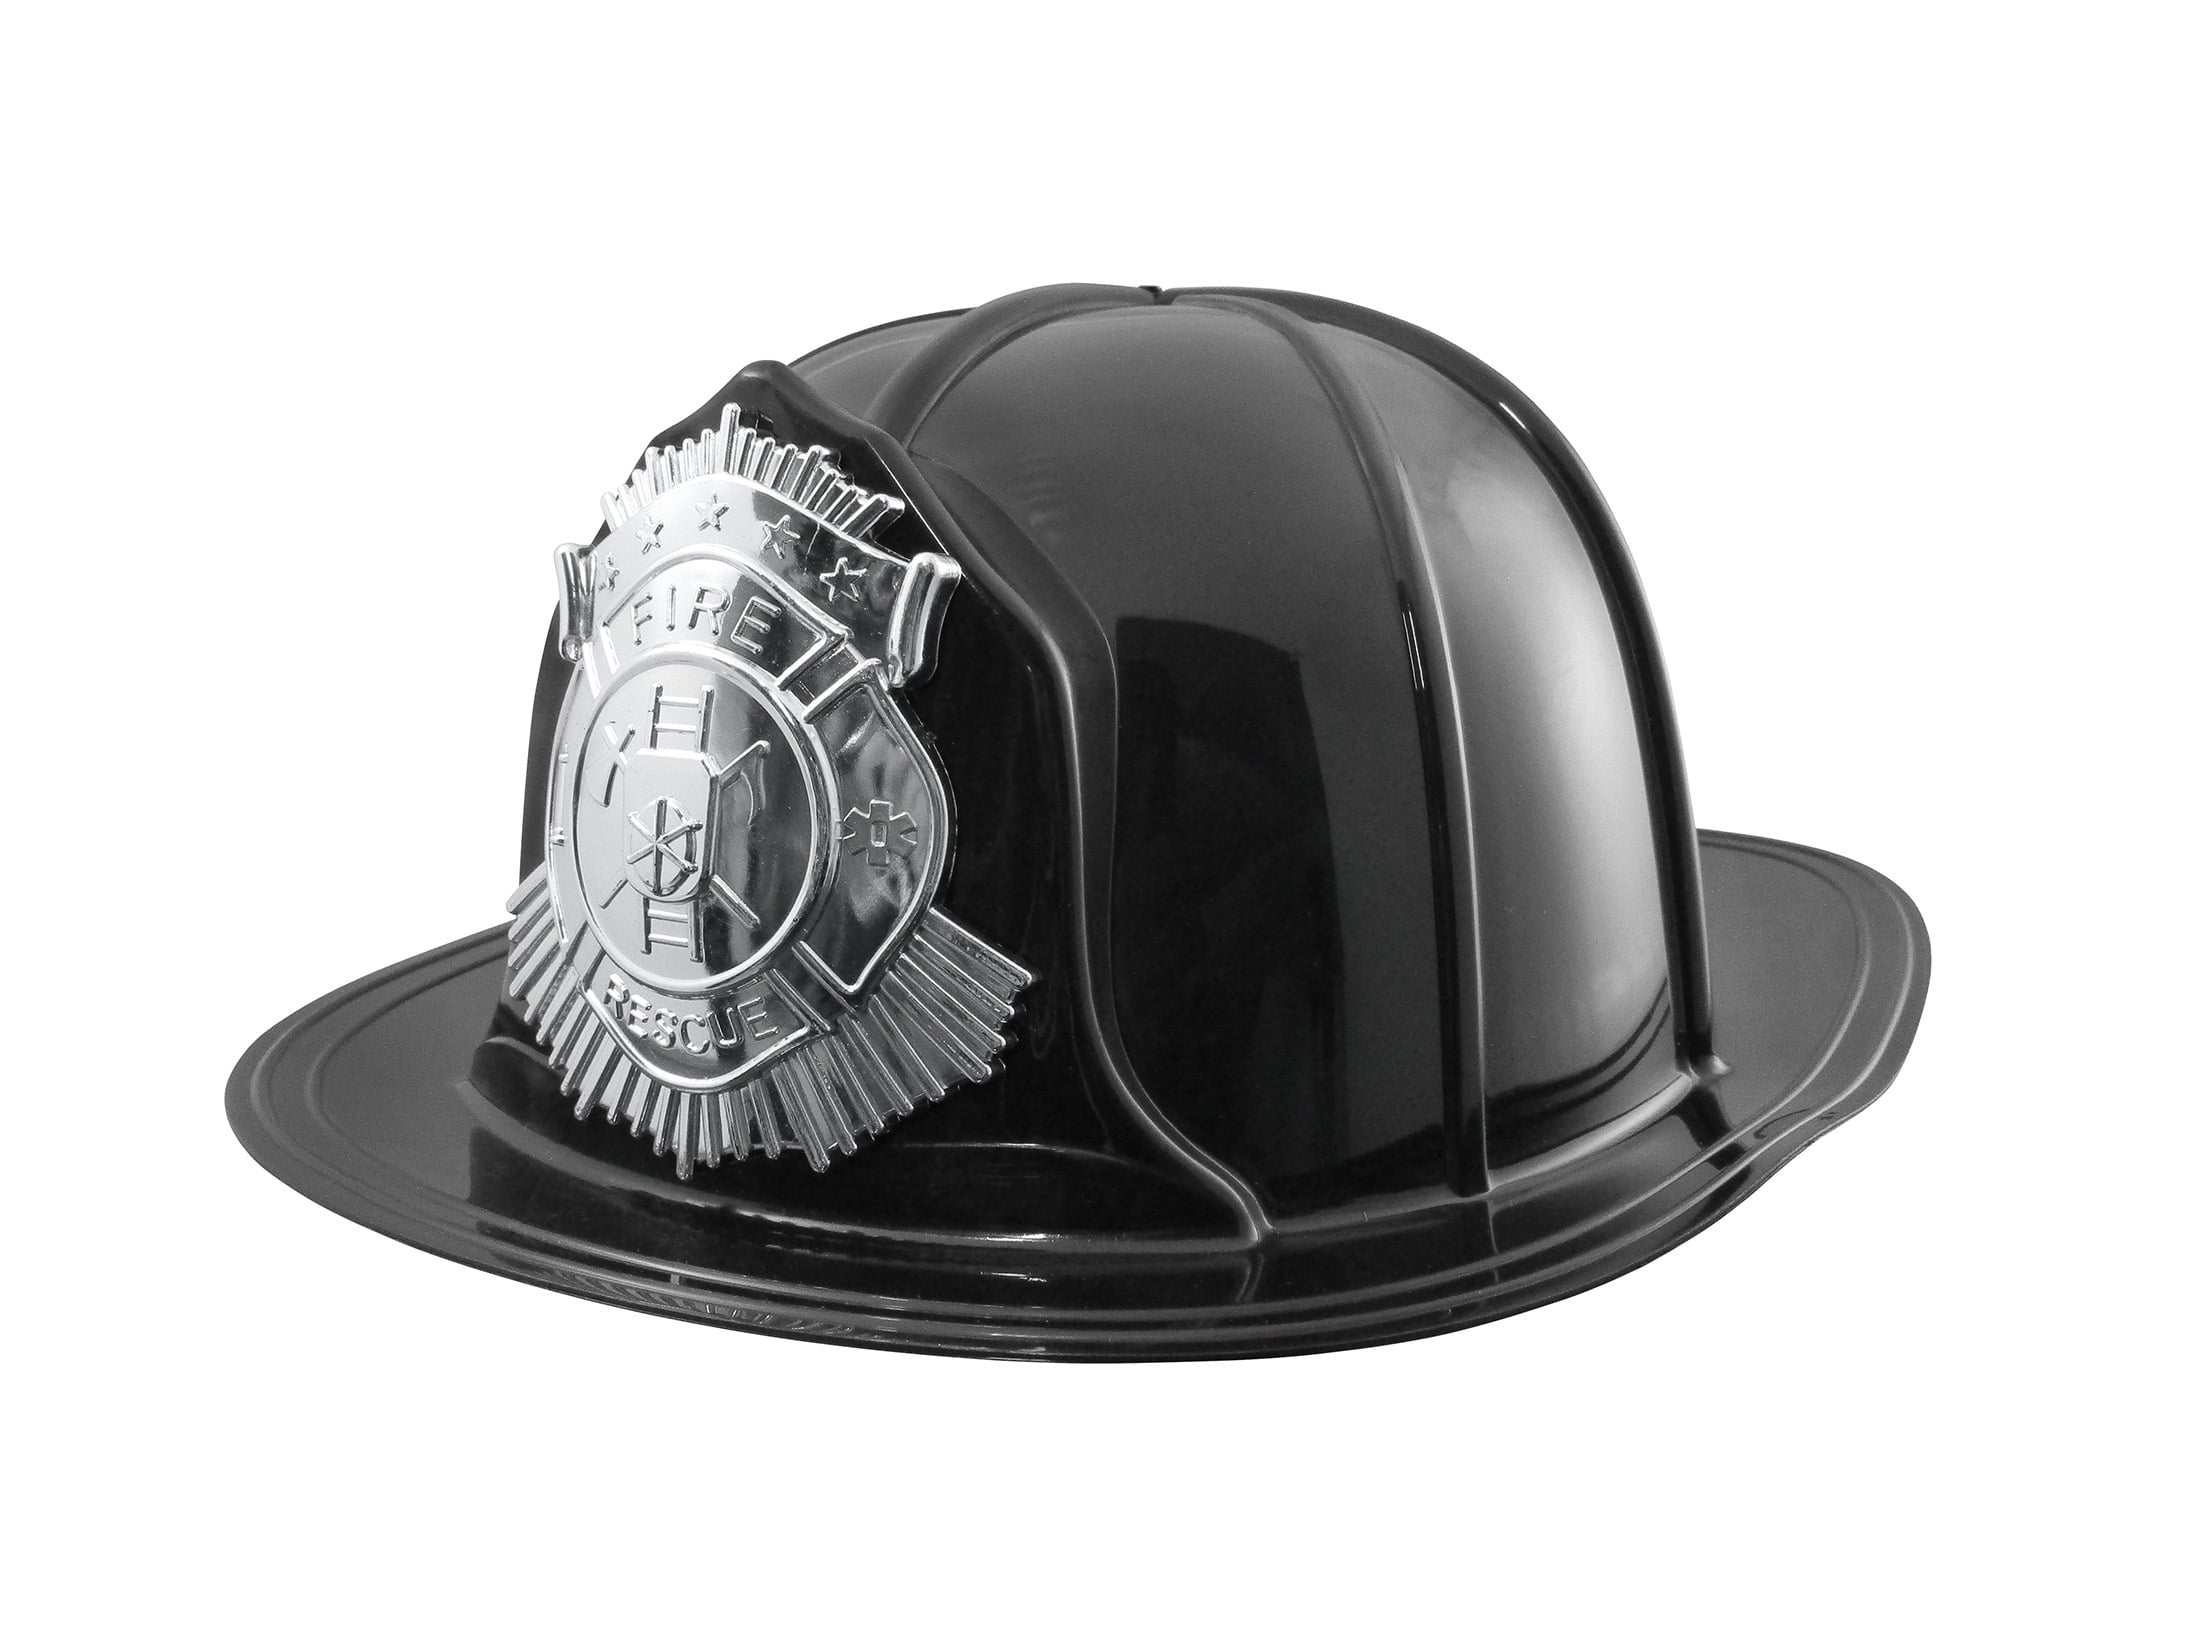 Fire Chief Fireman Fire Fighter Firefighter Helmet Black Hat Adult Accessory 